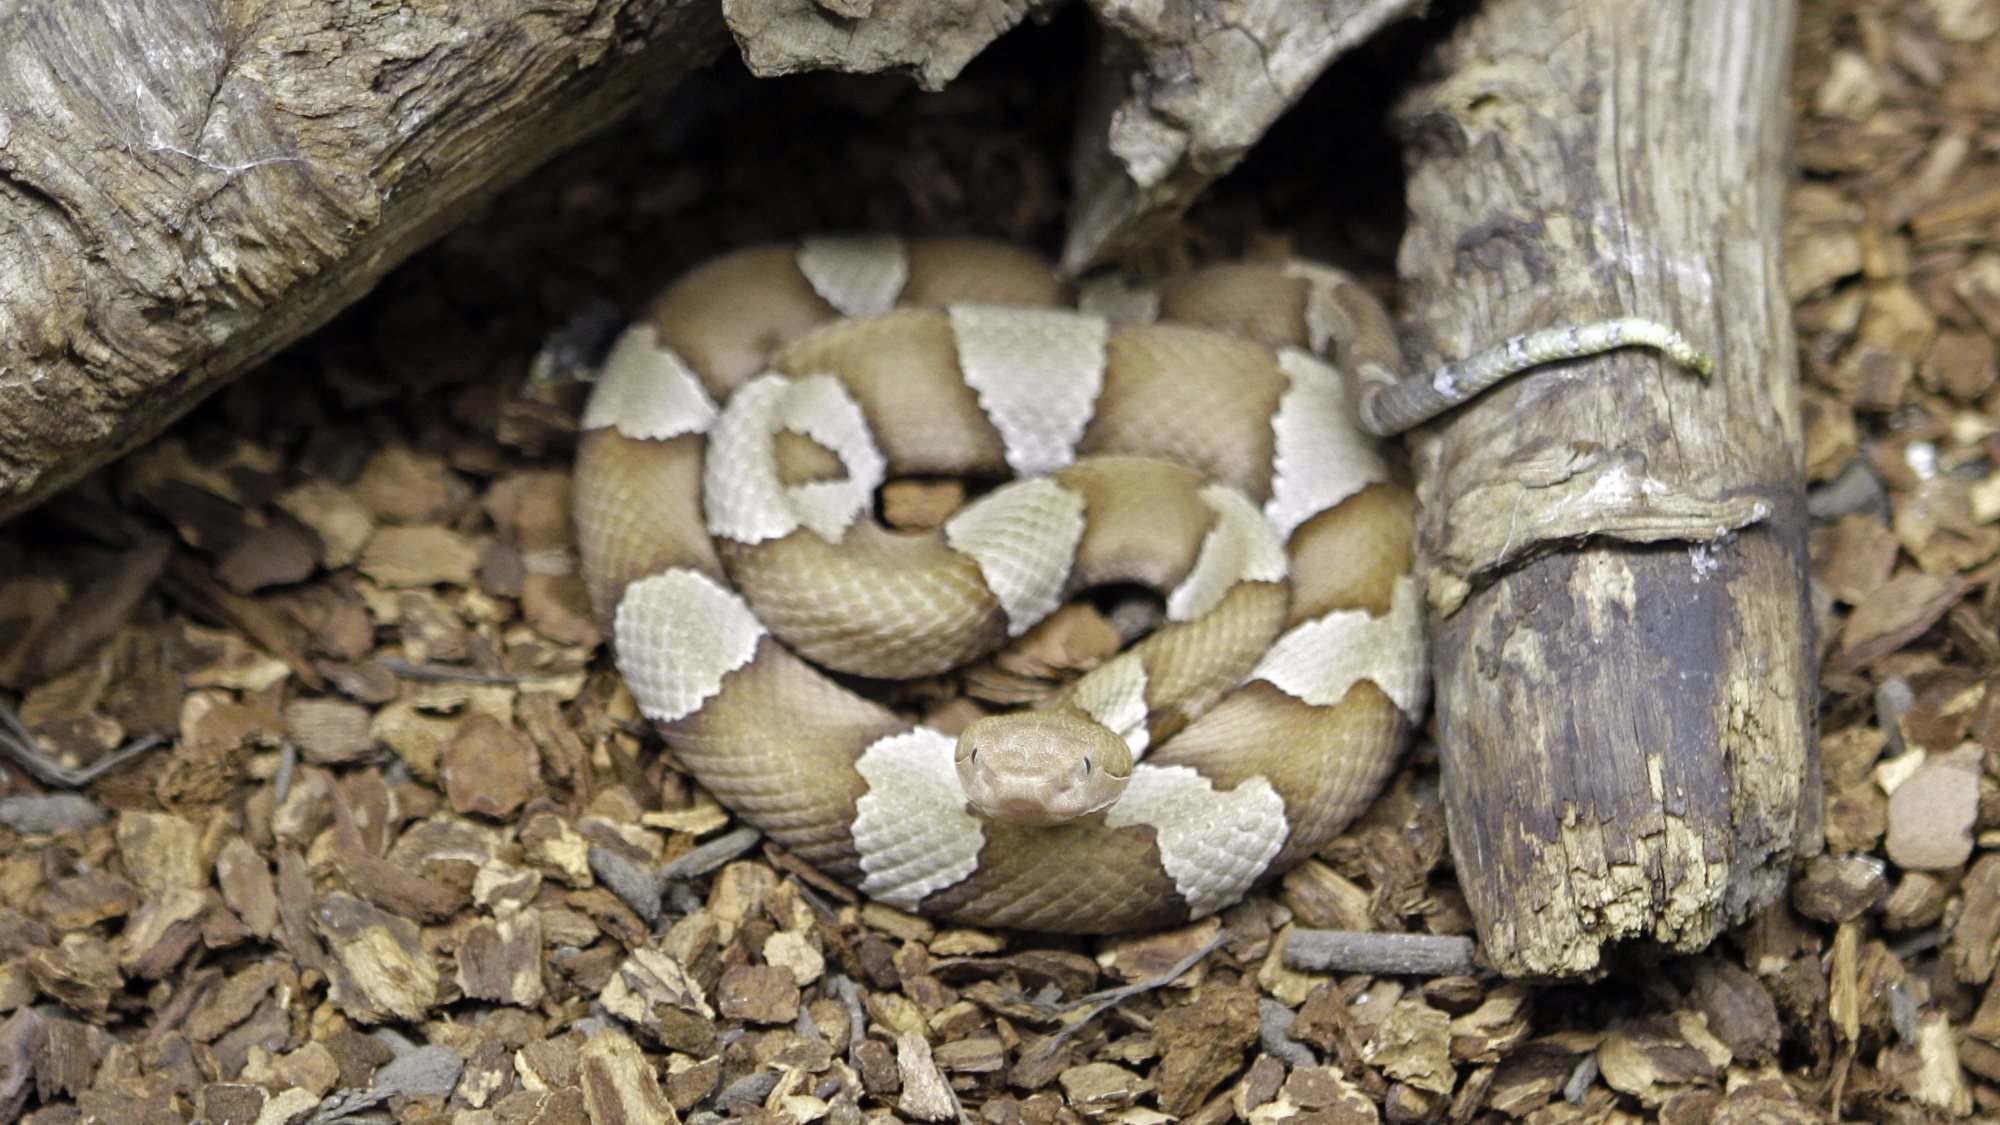 Wildlife Officials Warn People Of Baby Copperhead Snake Season